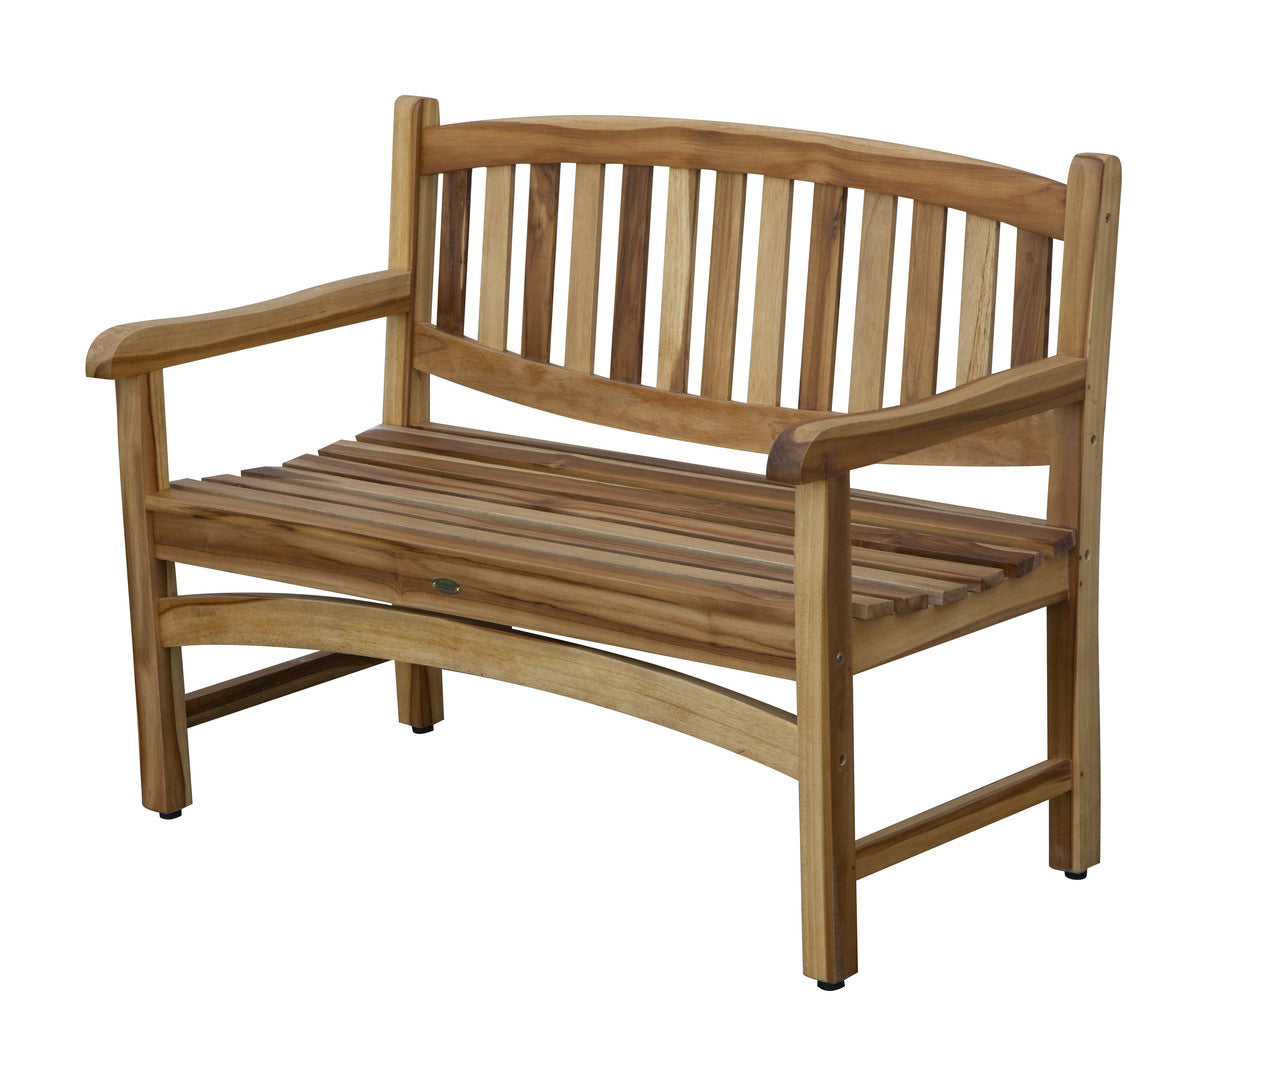 EcoDecors® Kent Garden 51" Teak Wood Outdoor Bench in EarthyTeak Finish